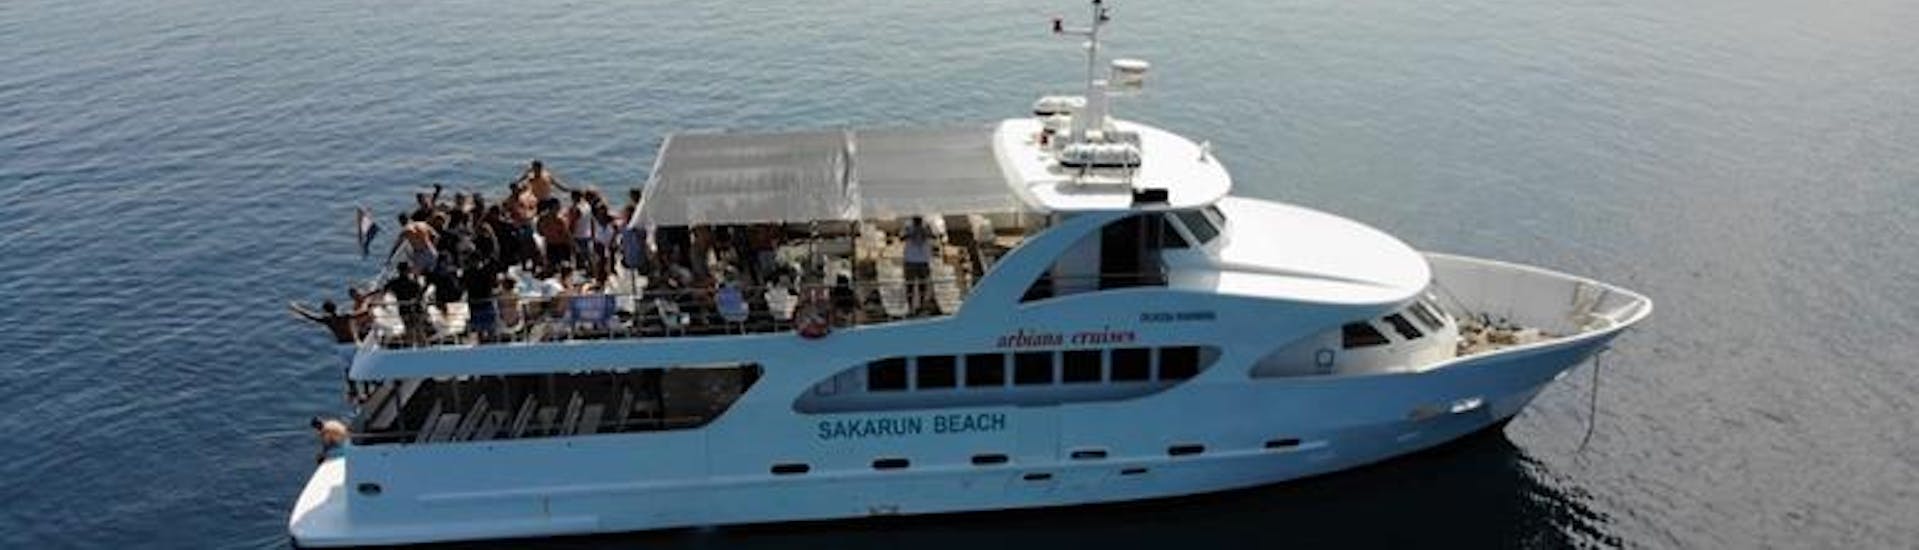 boat-trip-to-island-dugi-otok-with-sakarun-beach-from-zadar-hero